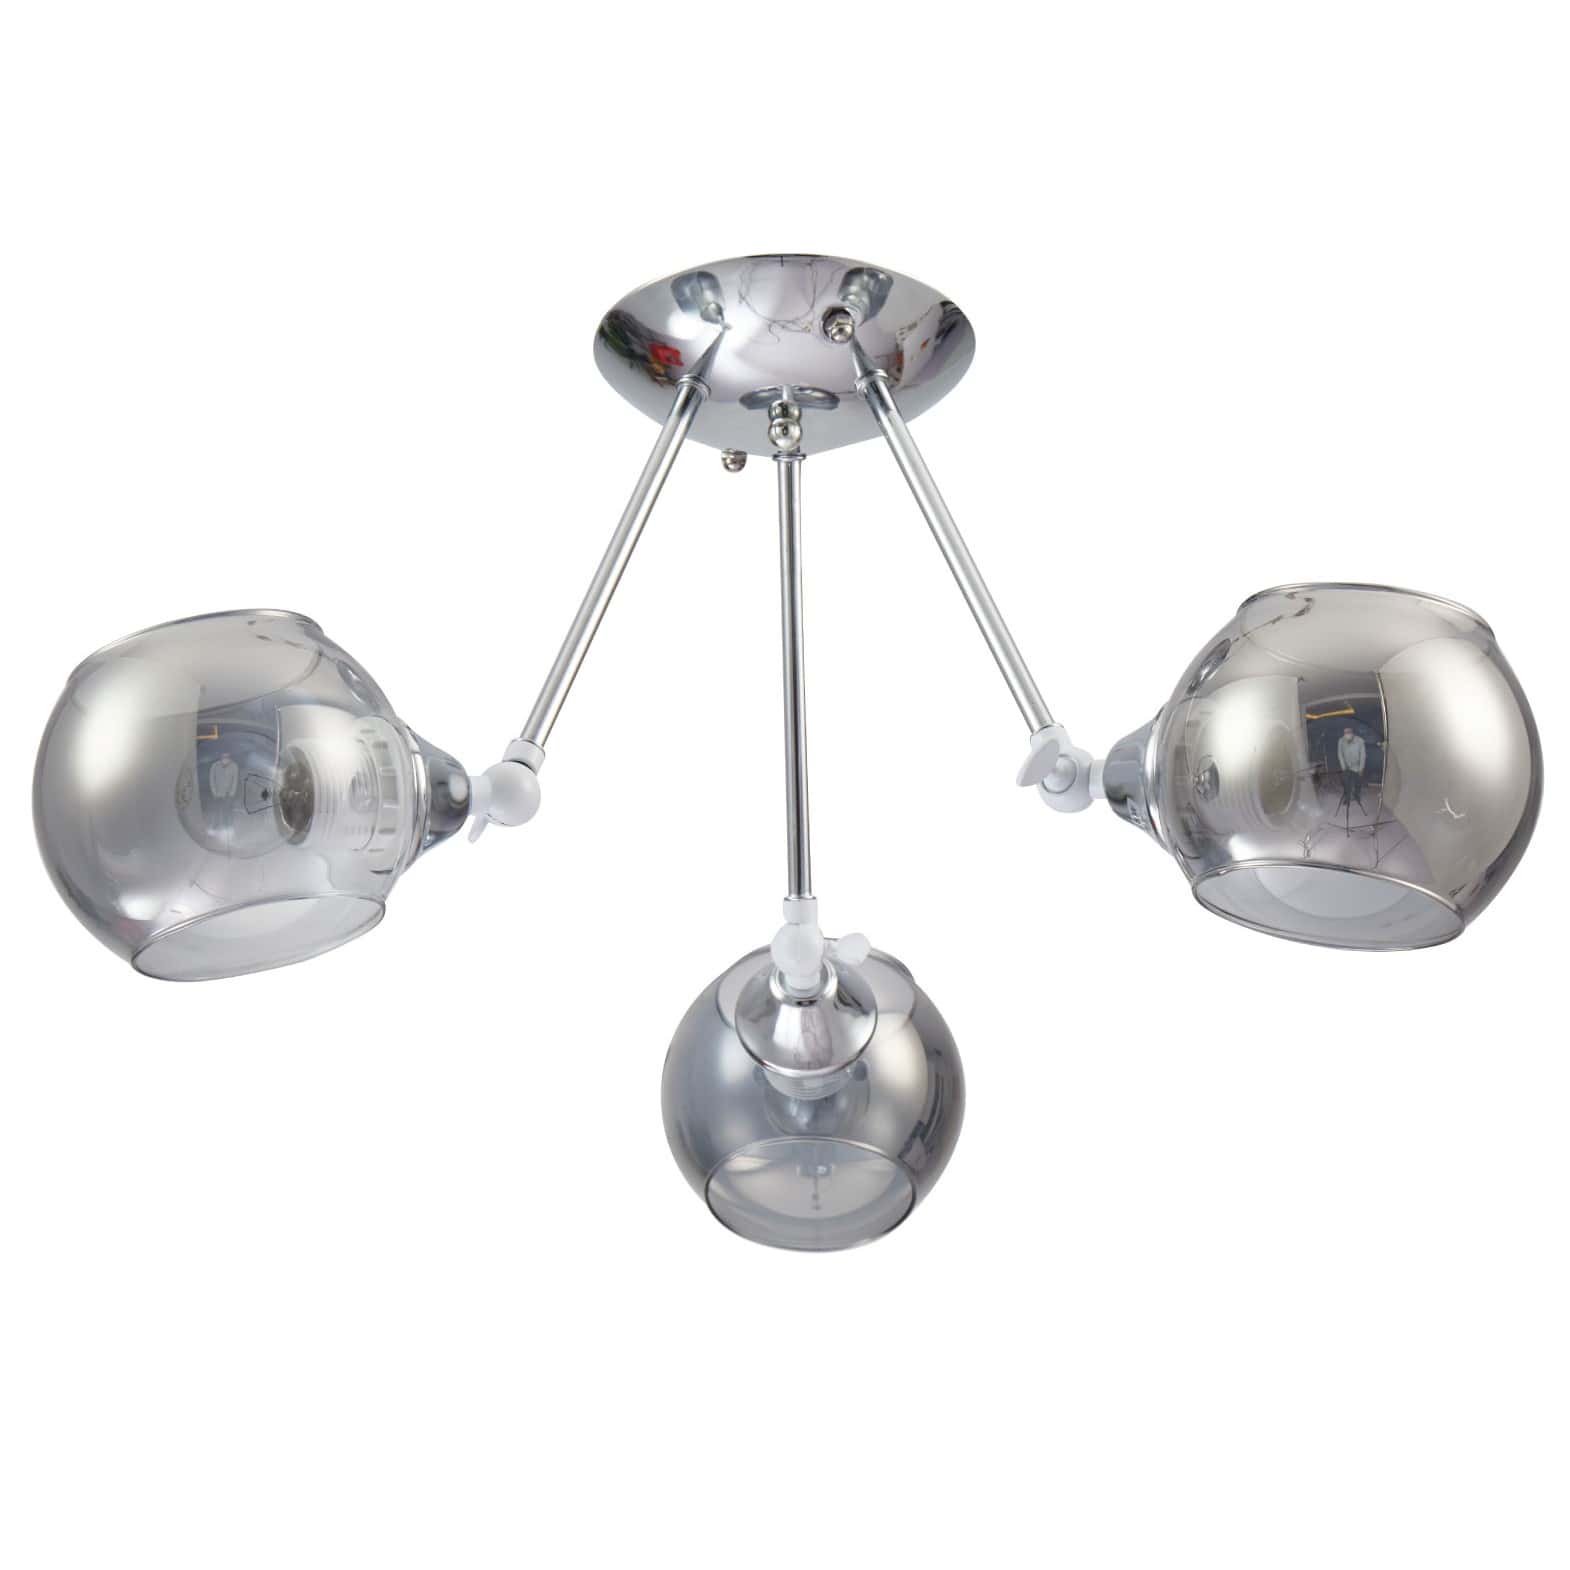 Main image of Smoky Cut-out Globe Glass Hinged Chrome Metal Semi Flush Ceiling Light | TEKLED 159-17584